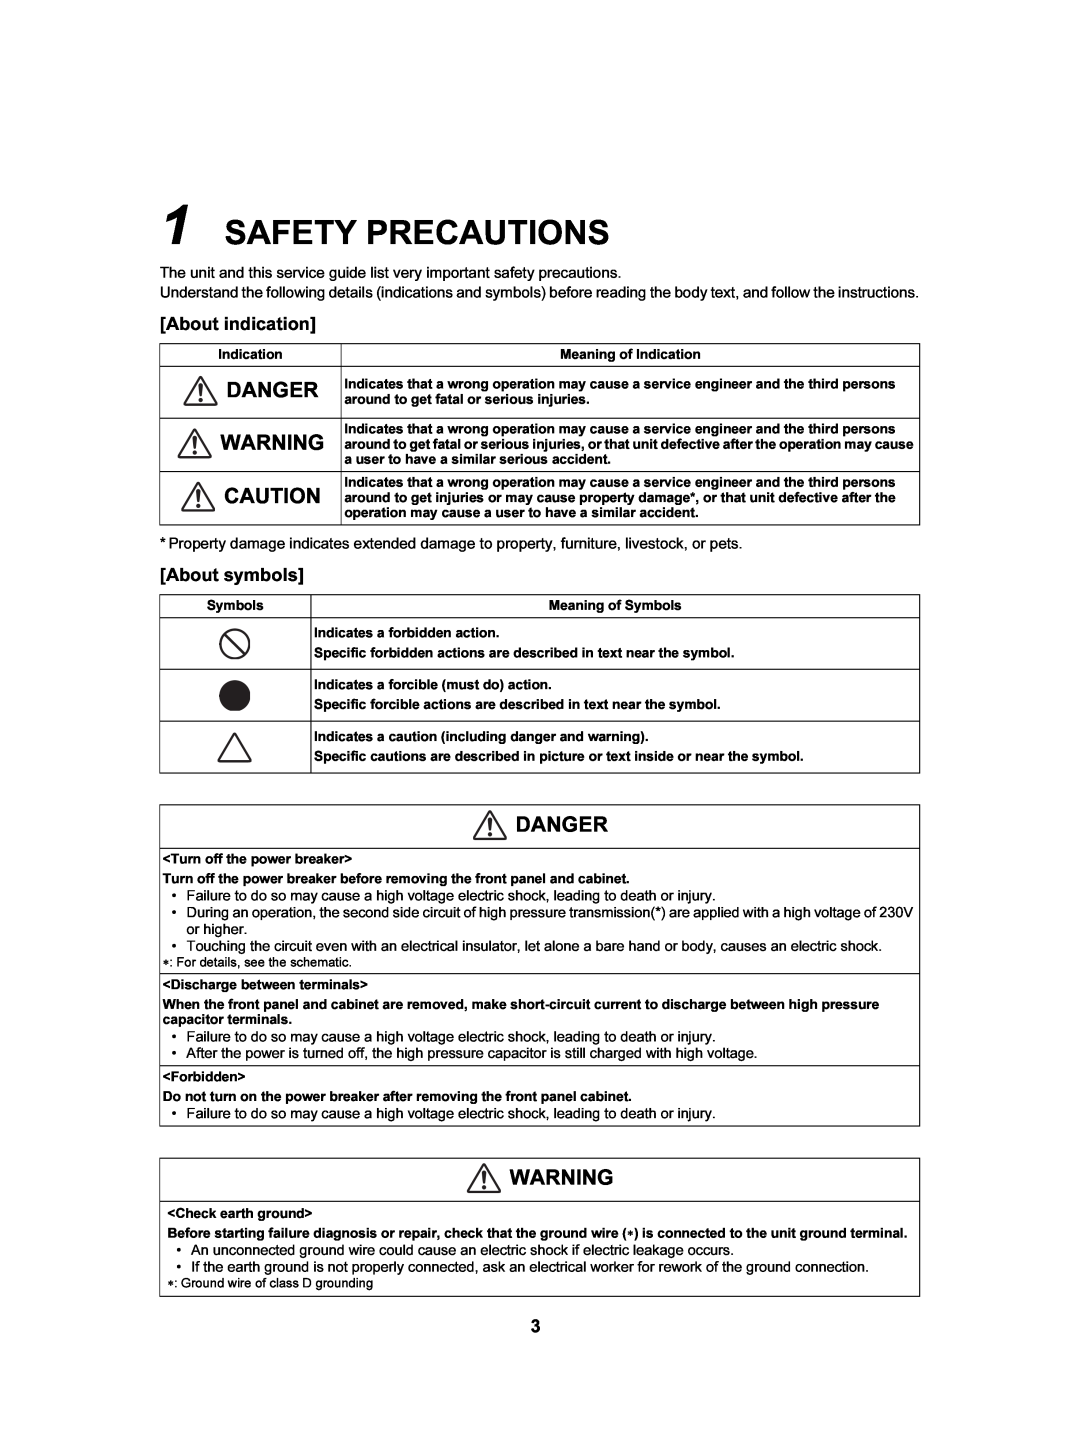 Toshiba HWS-2101CSHM3-E(-UK), HWS-802XWHT6-E, HWS-802H-E Safety Precautions, Danger, About indication, About symbols 